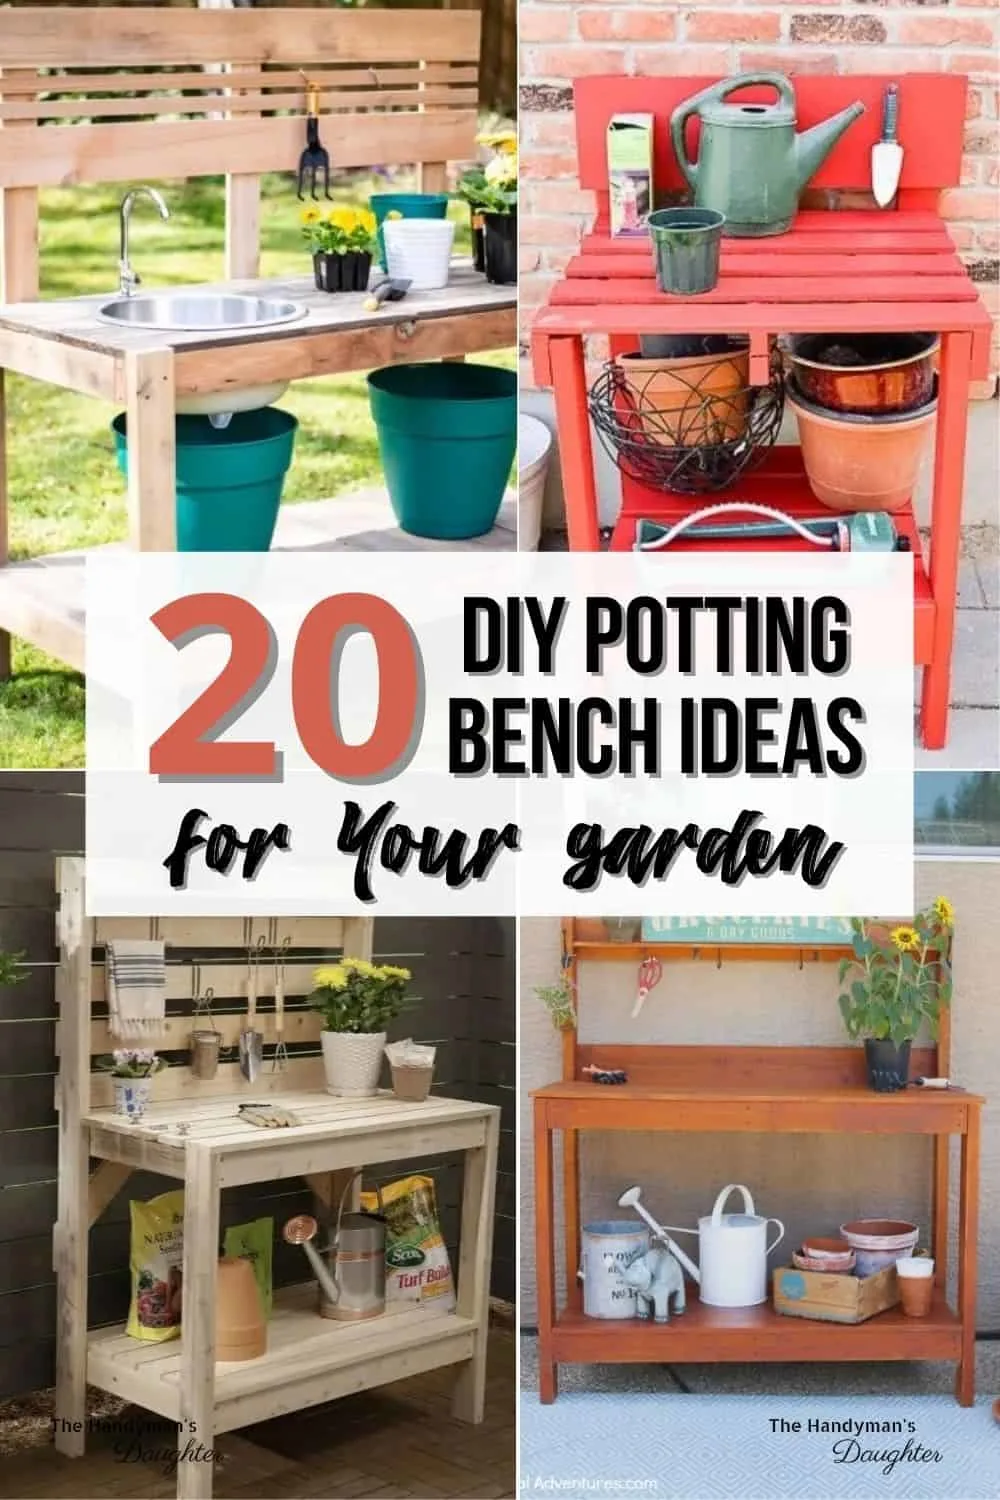 20 diy potting bench ideas for your garden - the handyman's daughter